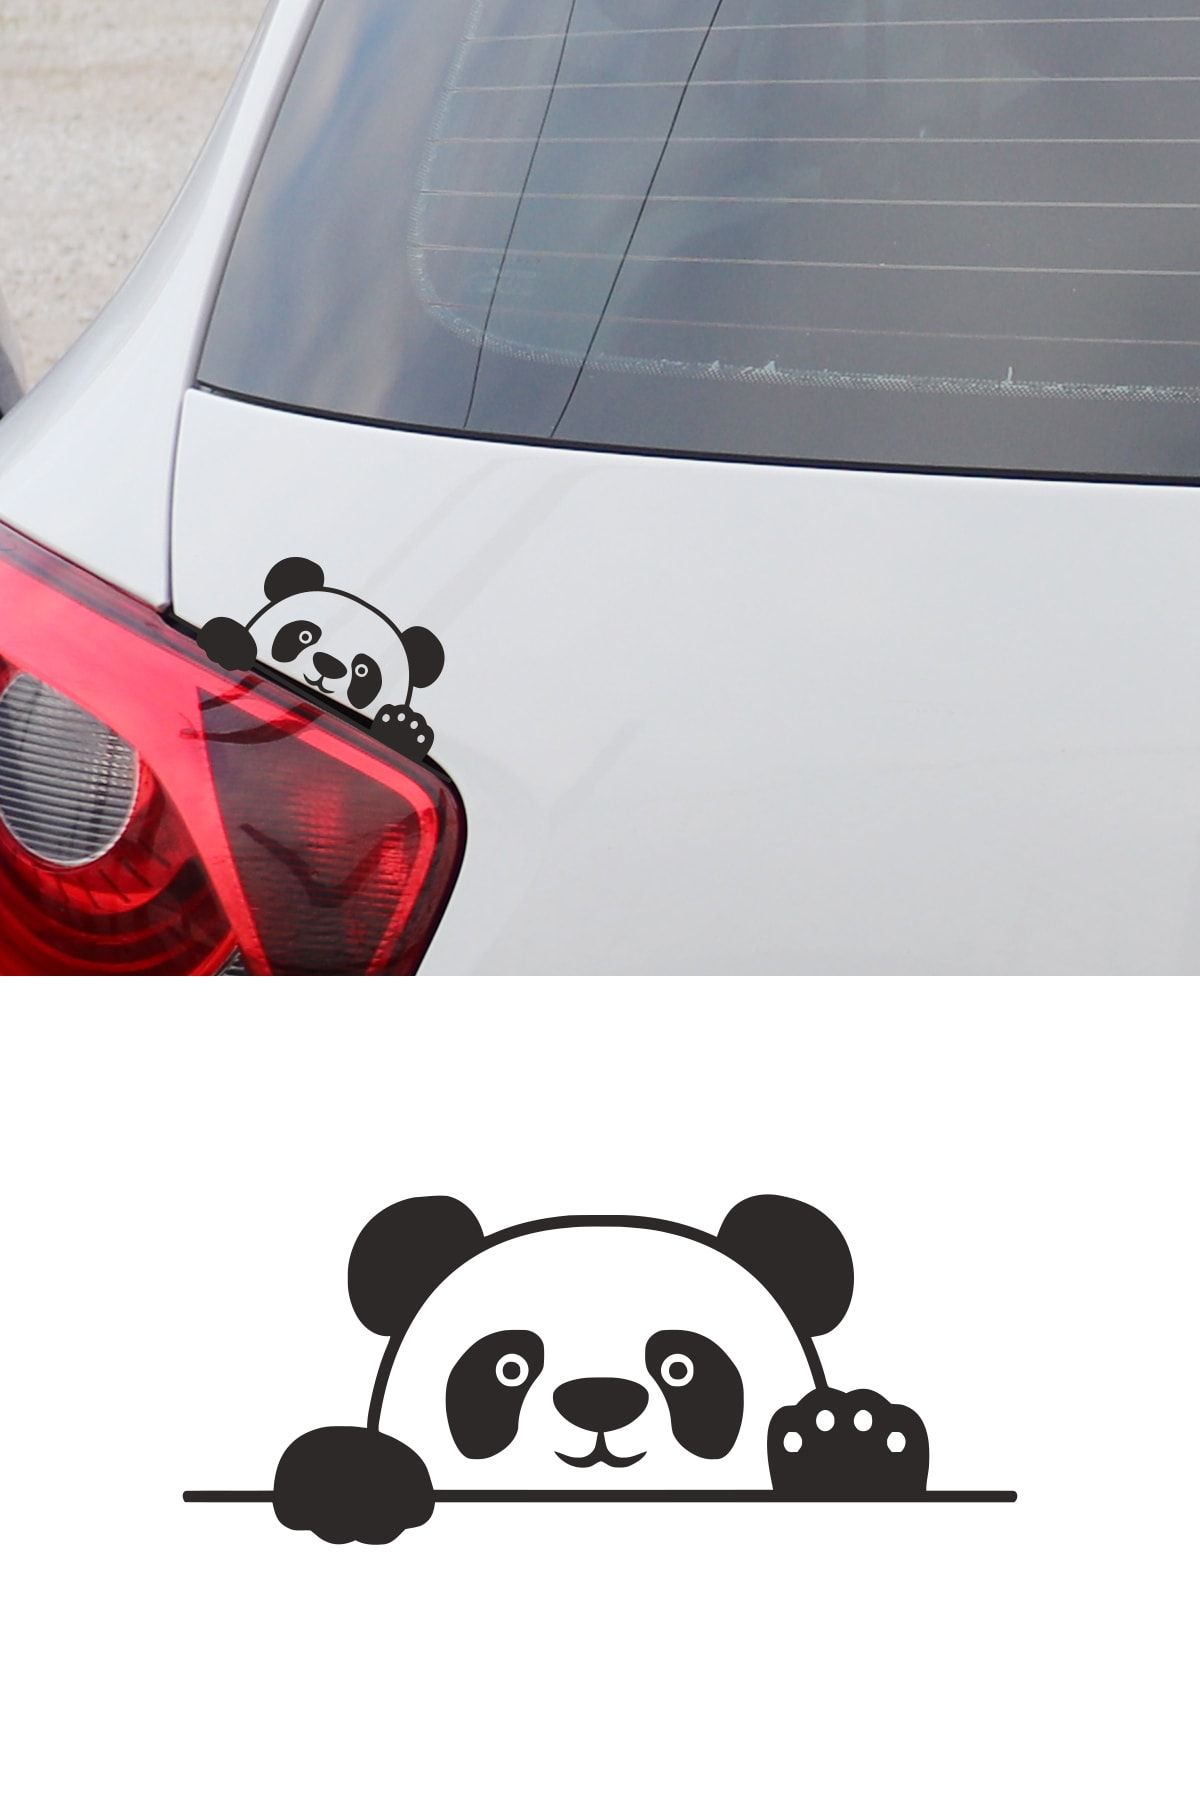 New Jargon Bagajdan Bakan Panda Sticker Etiket Çıkartma Pc Laptop Araba Oto Motor 20 Cm